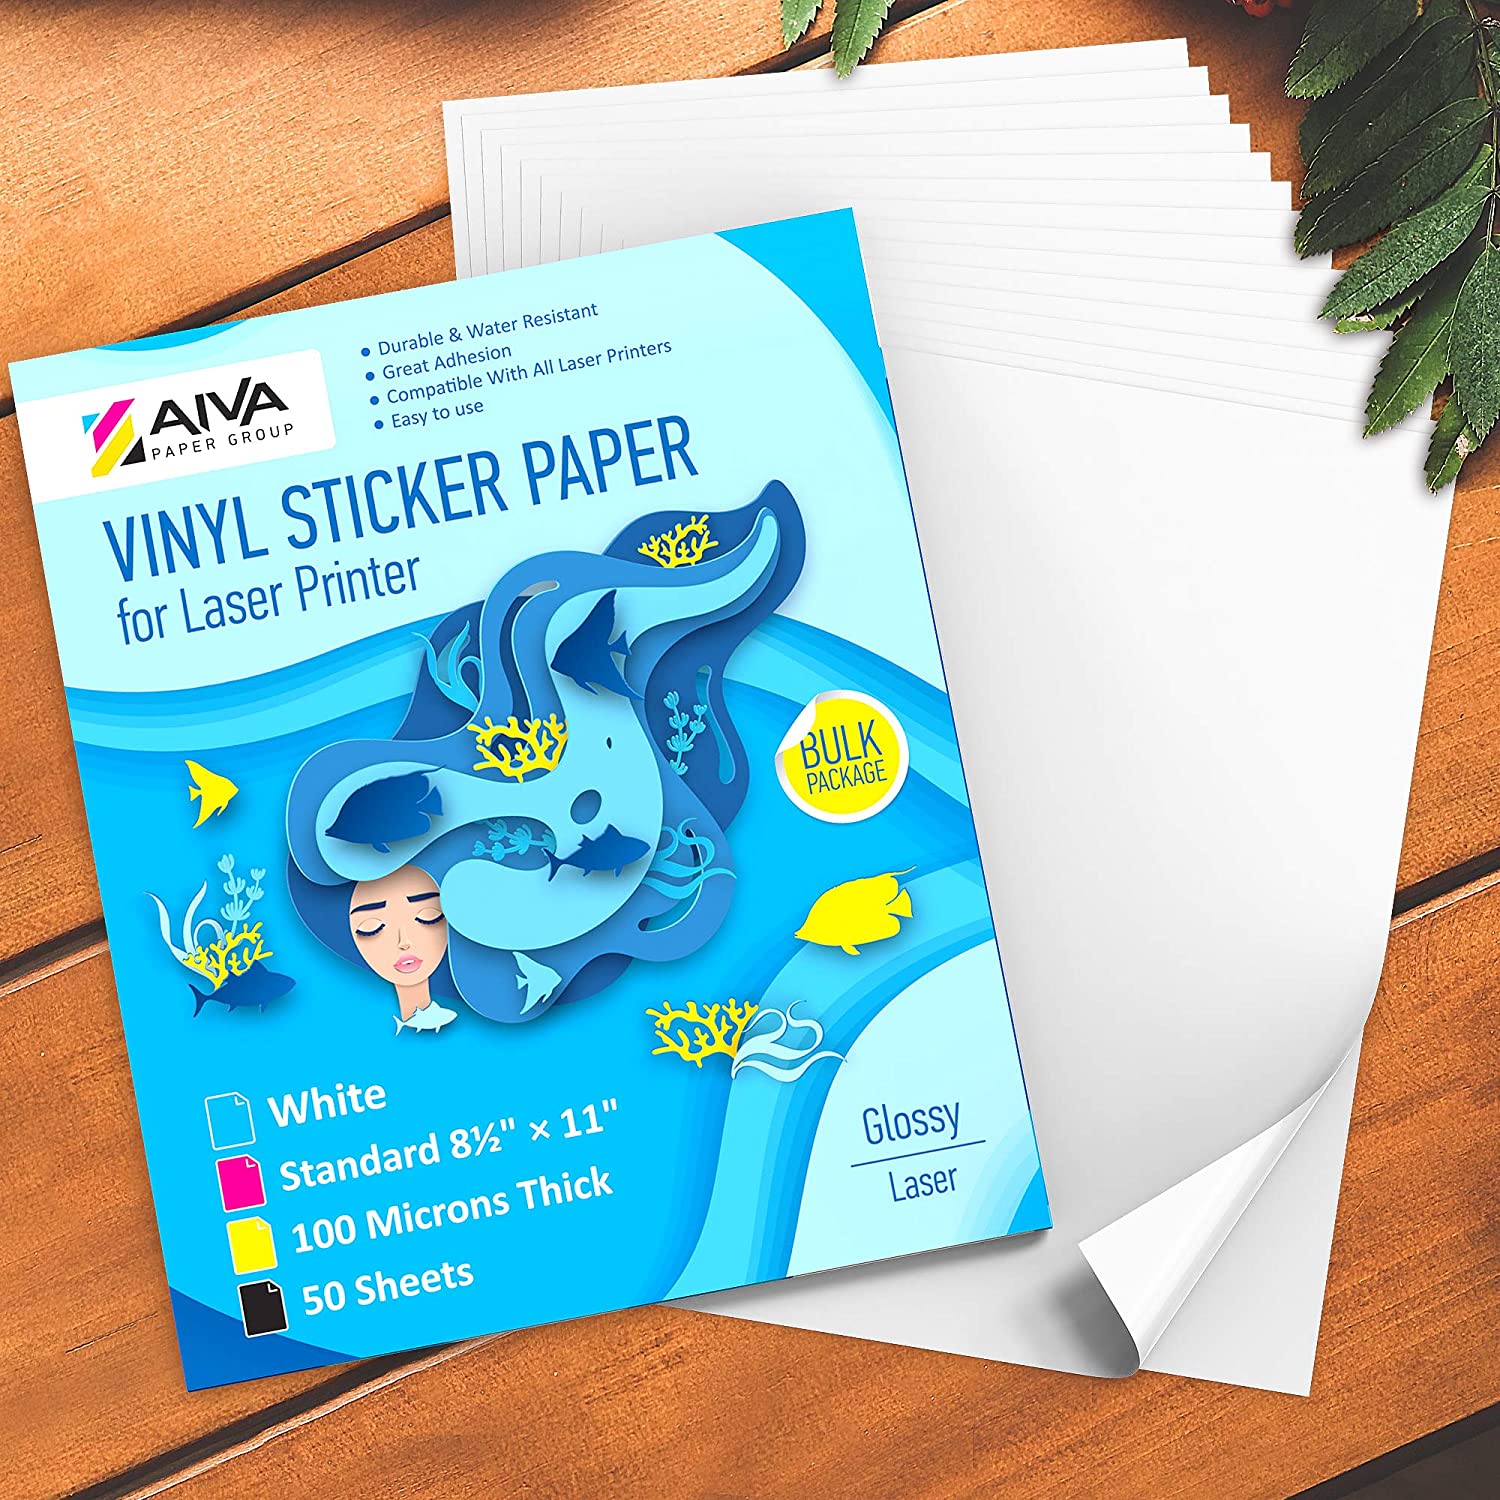 Is Printable Sticker Paper The Same As Printable Vinyl